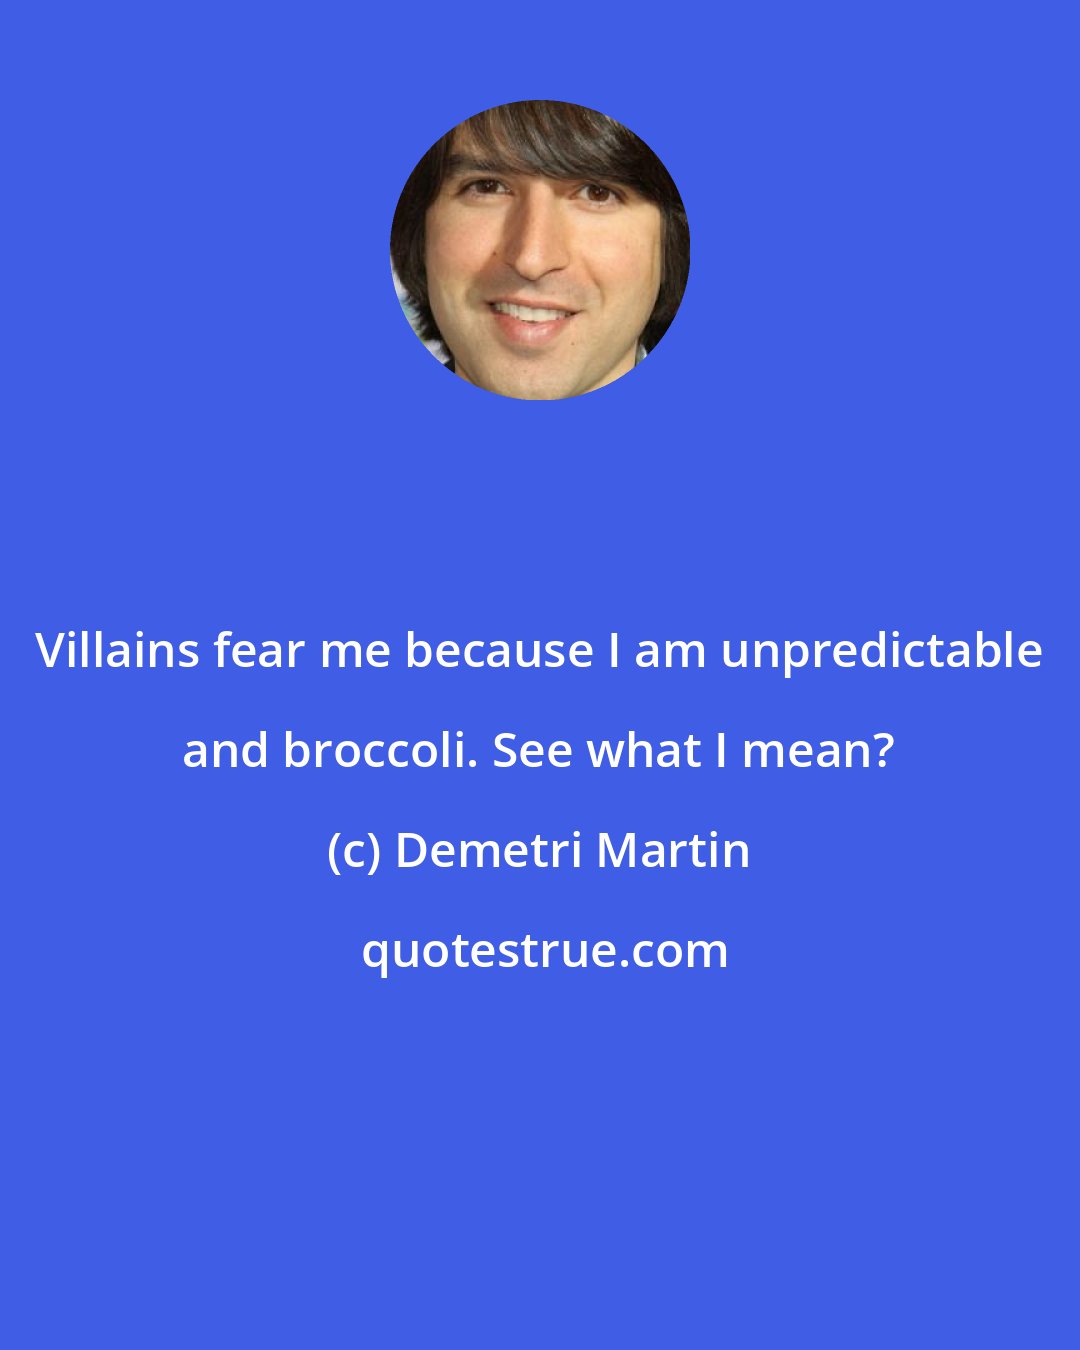 Demetri Martin: Villains fear me because I am unpredictable and broccoli. See what I mean?